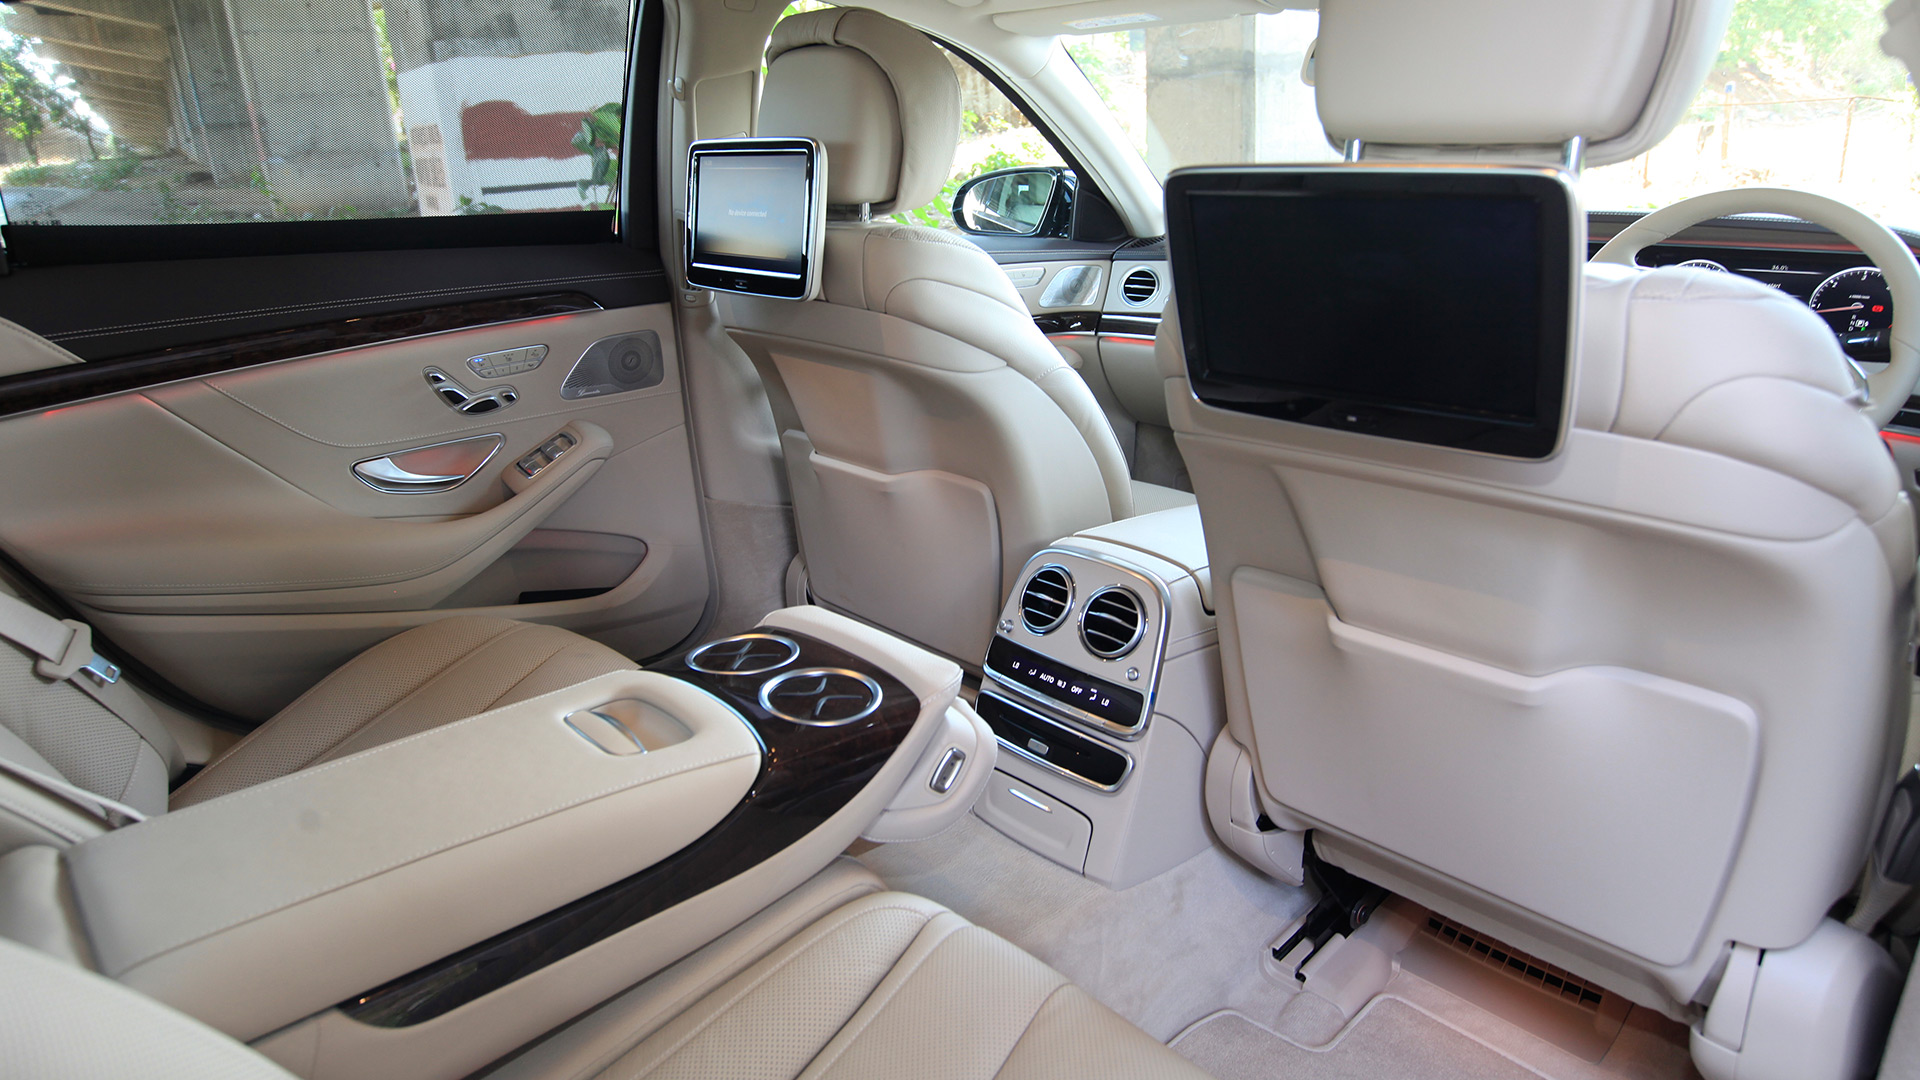 Mercedesbenz-S Class-2014 S350 CDi Interior